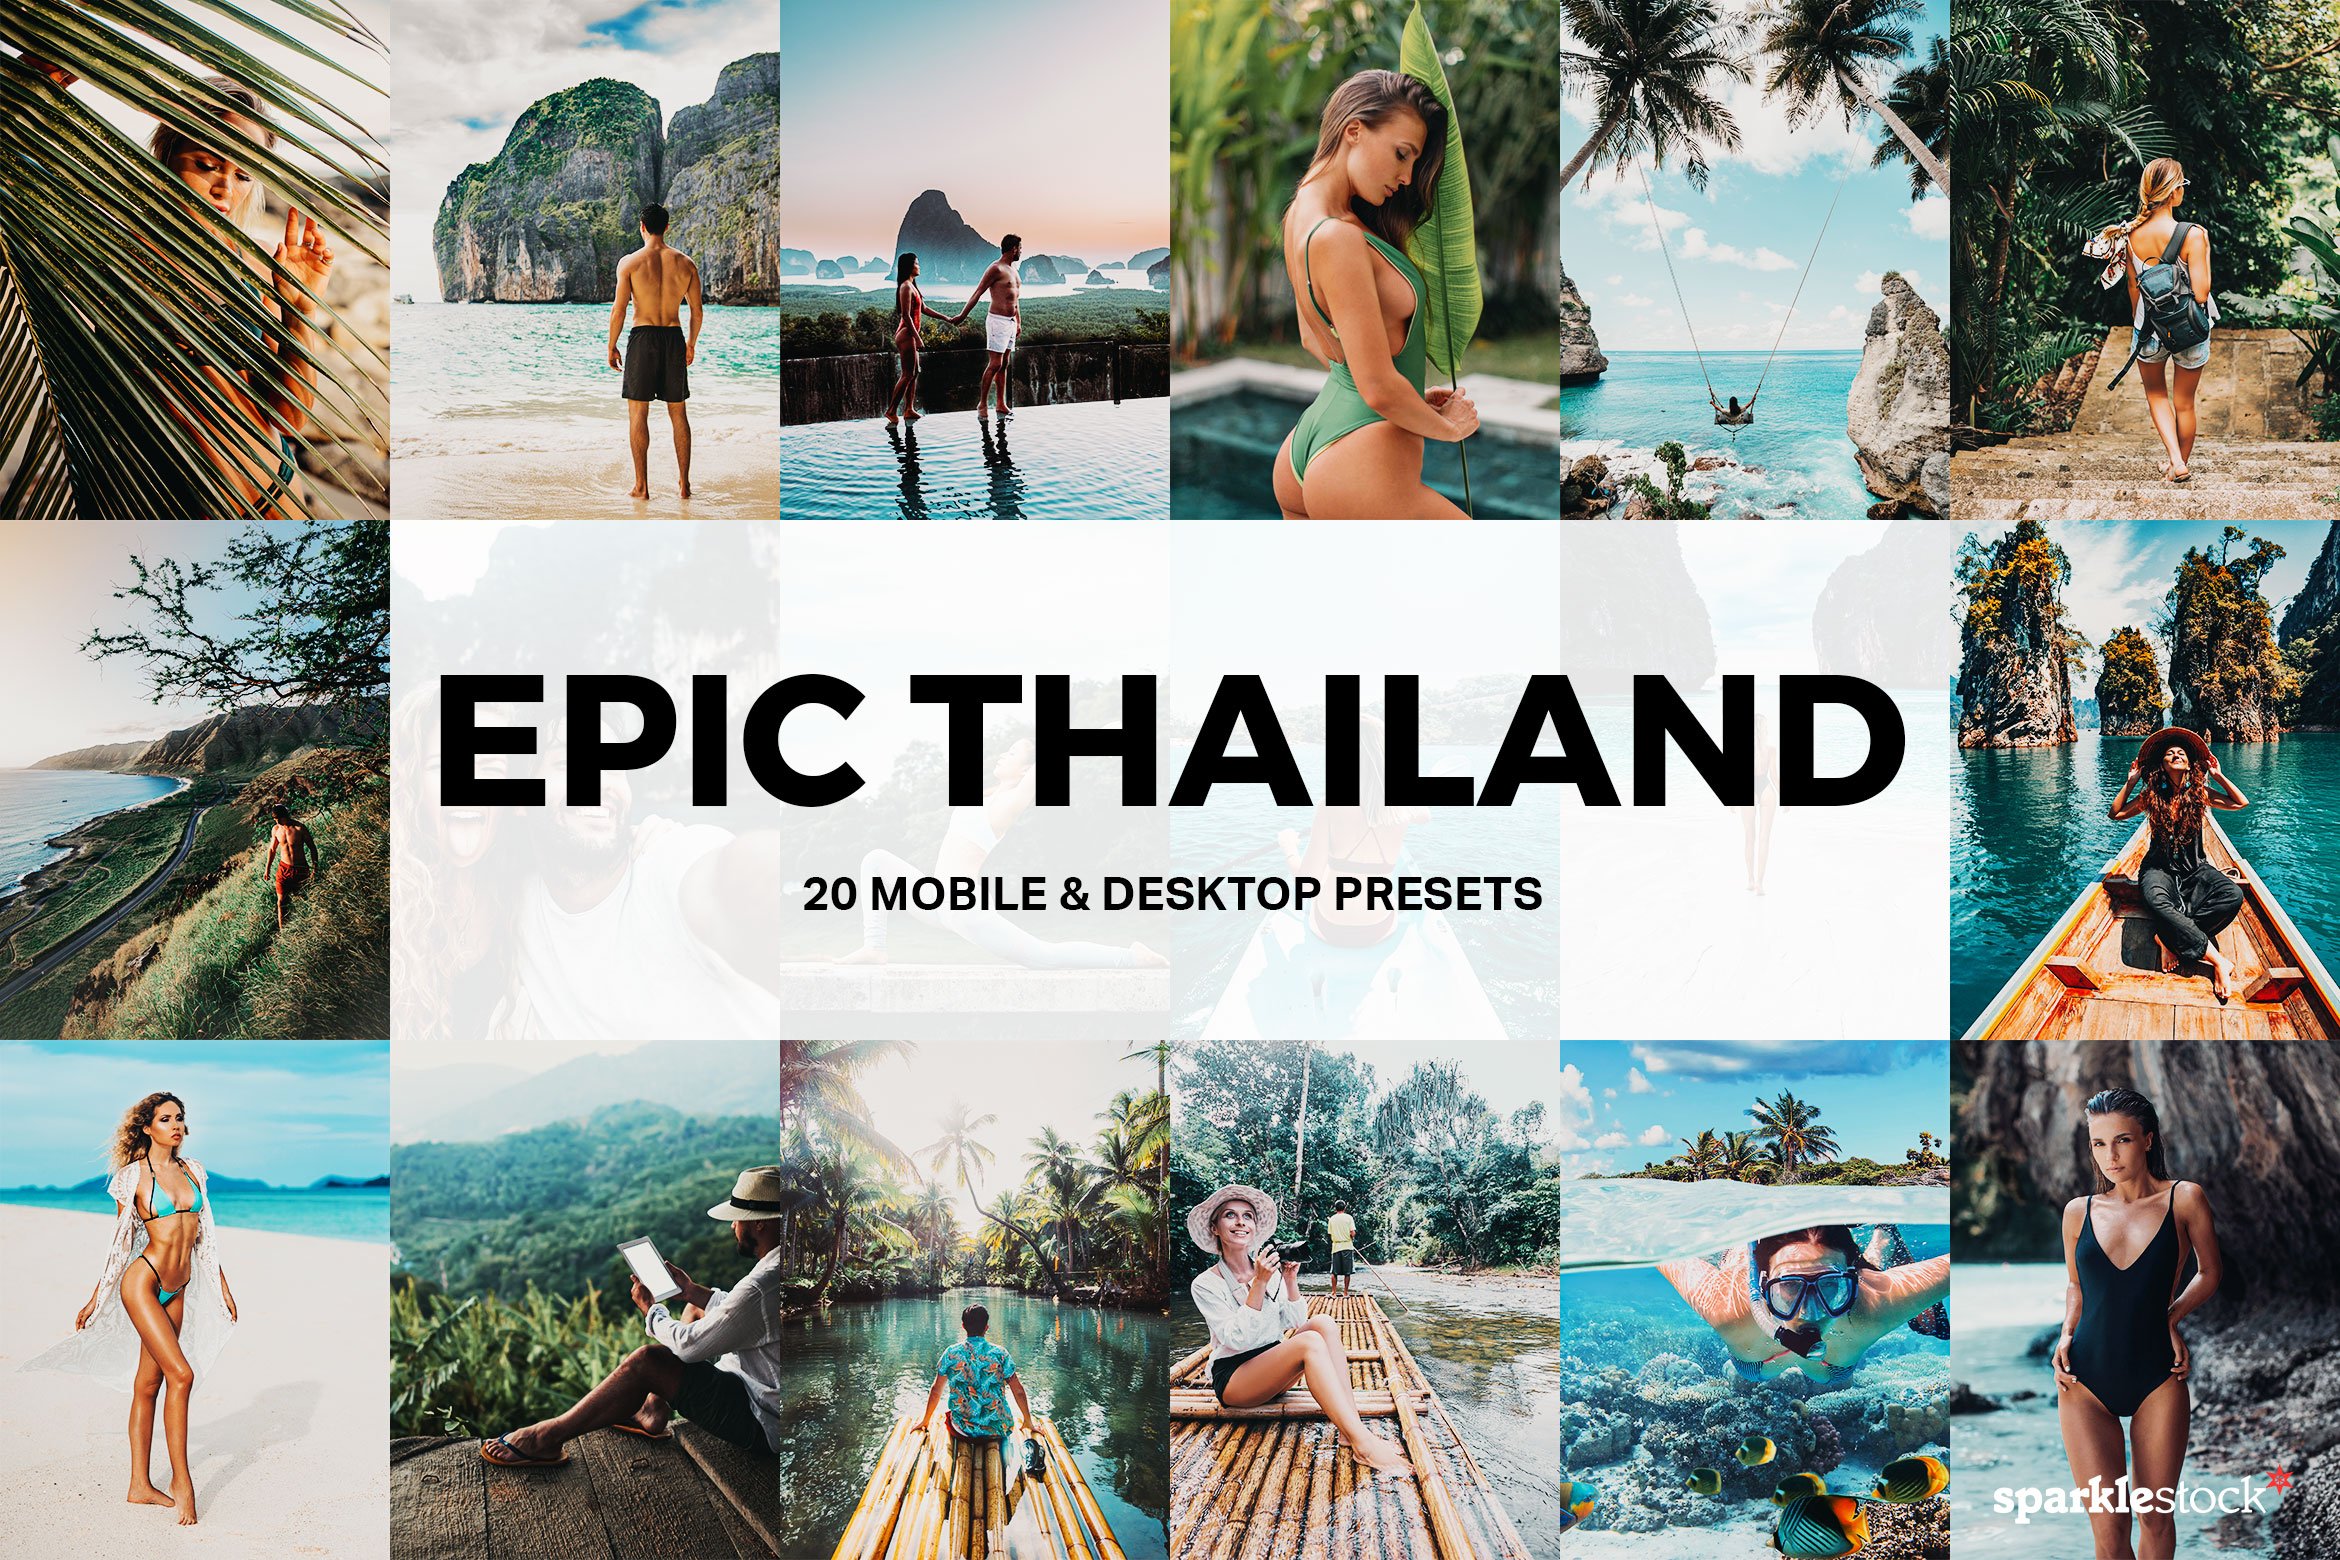 20 Epic Thailand Lightroom Presetscover image.